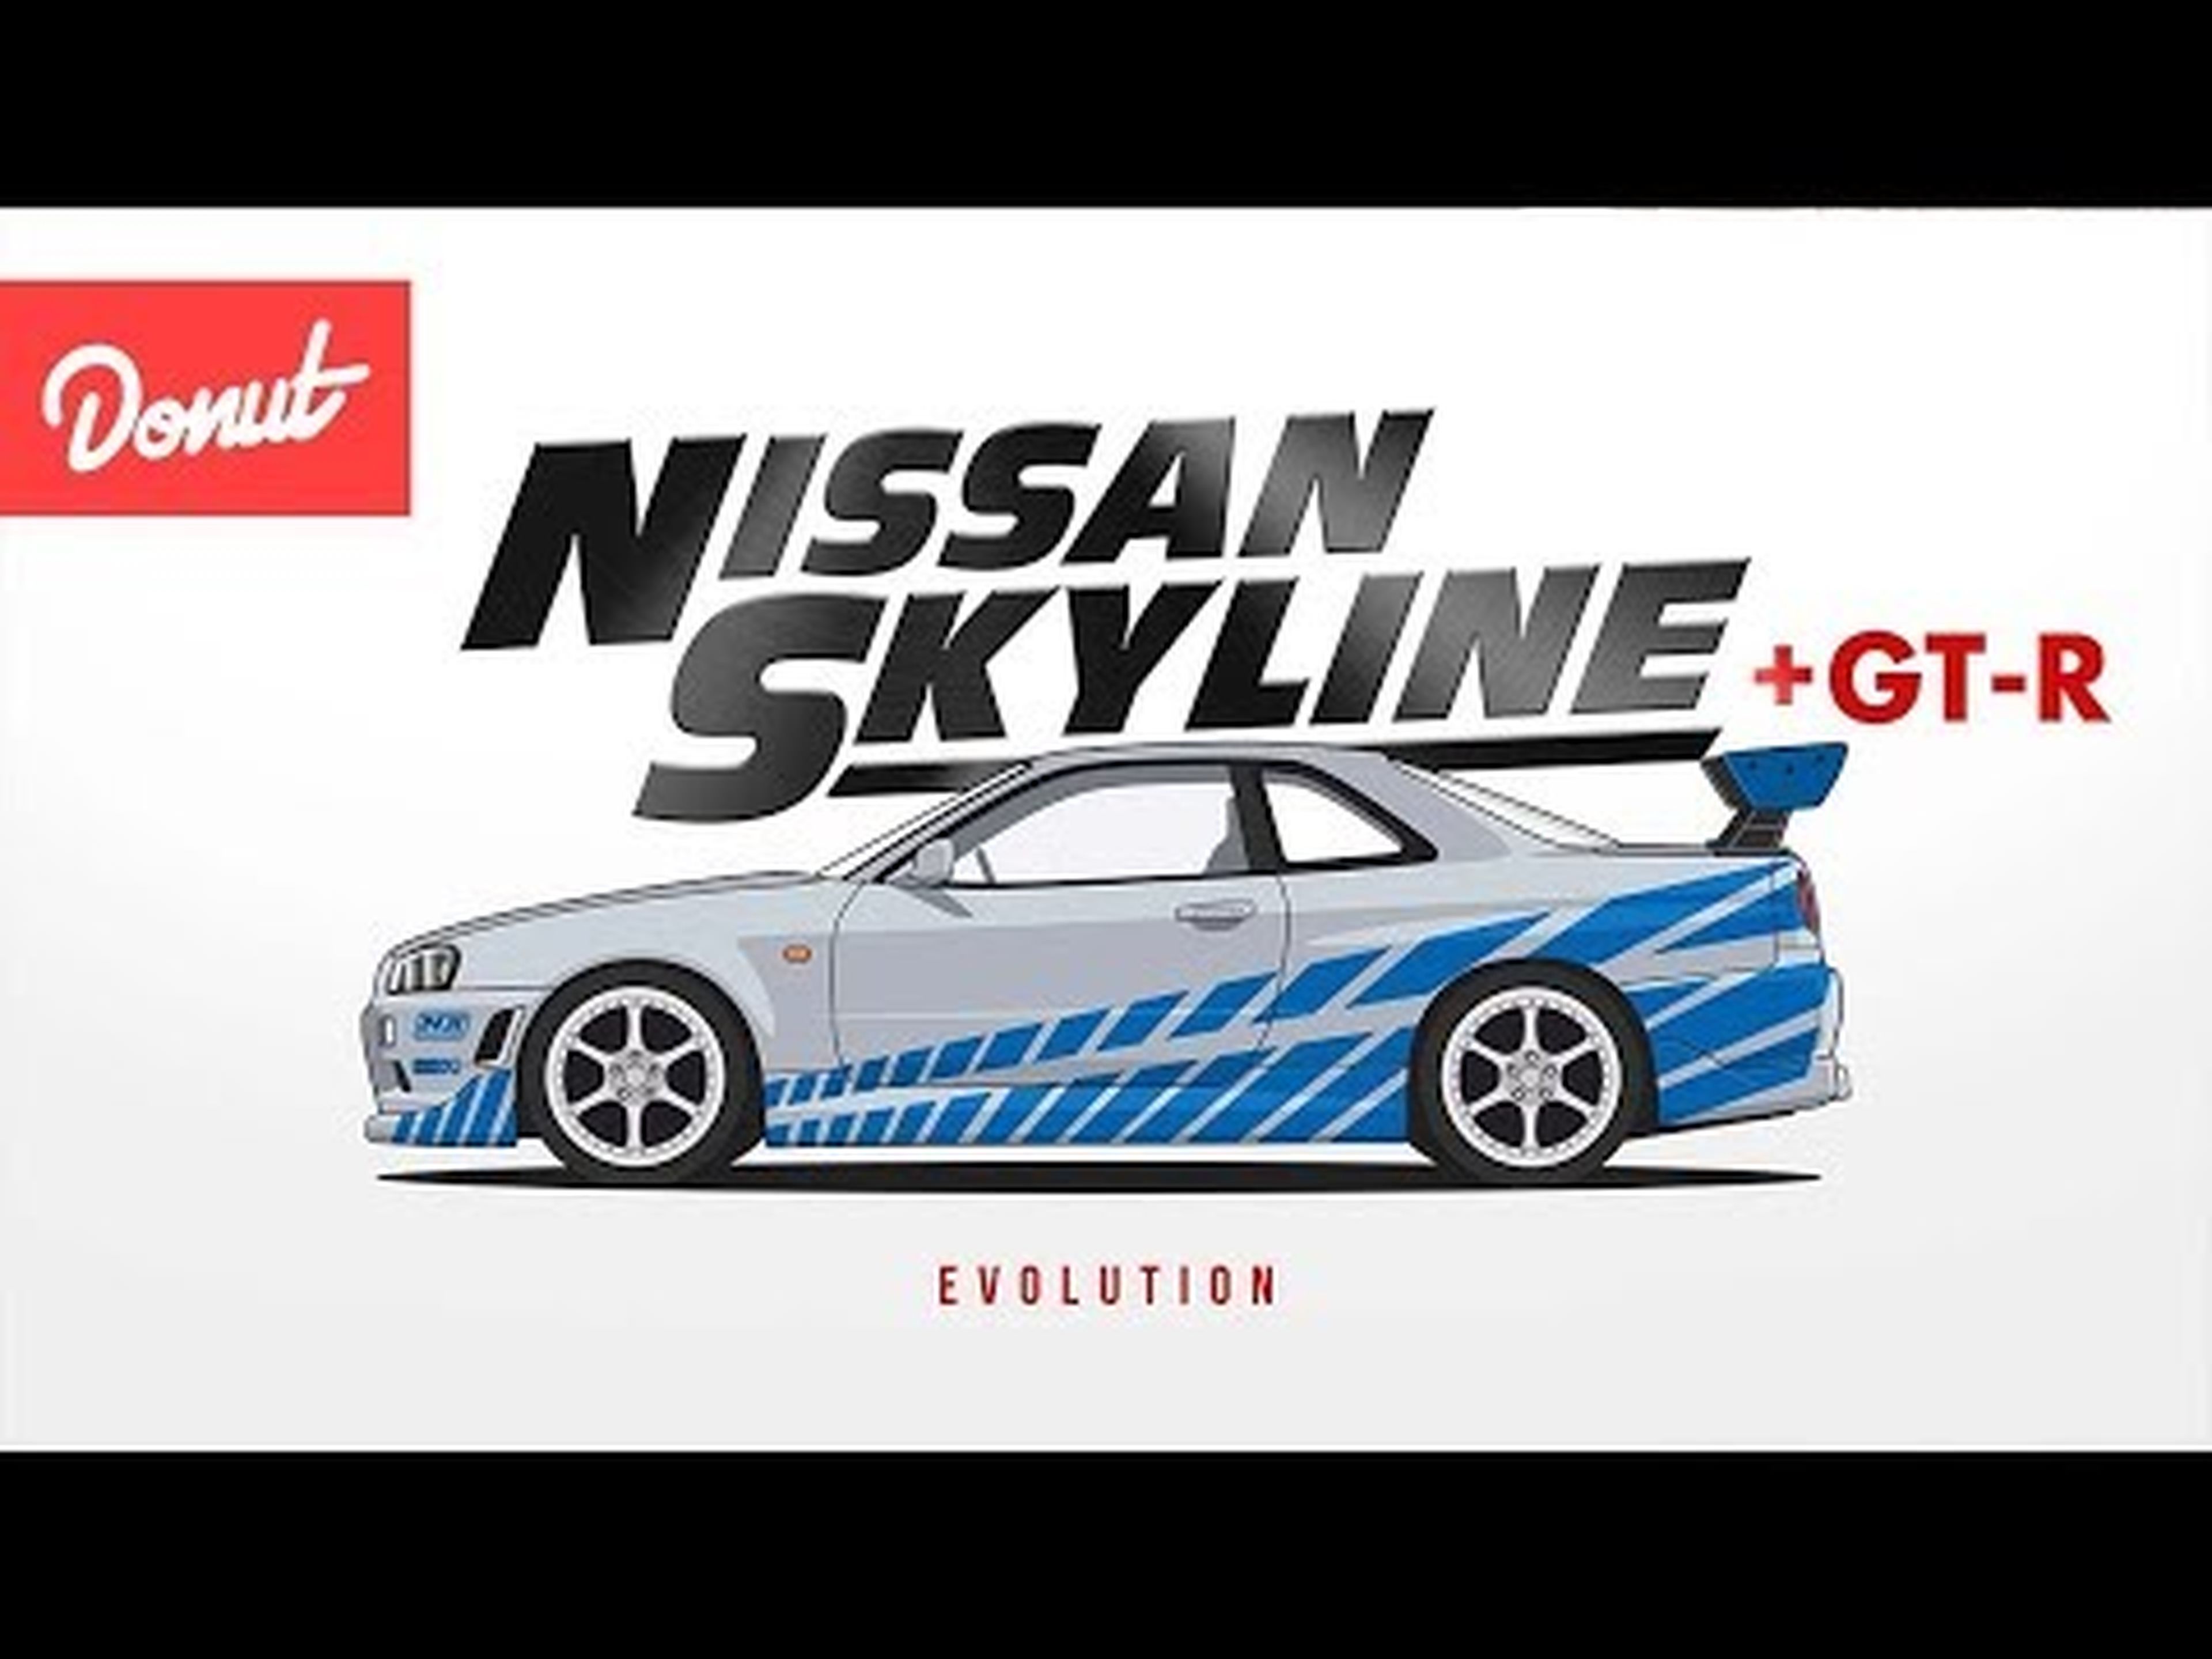 Evolution of the Nissan Skyline [ + GT-R ] | Donut Media